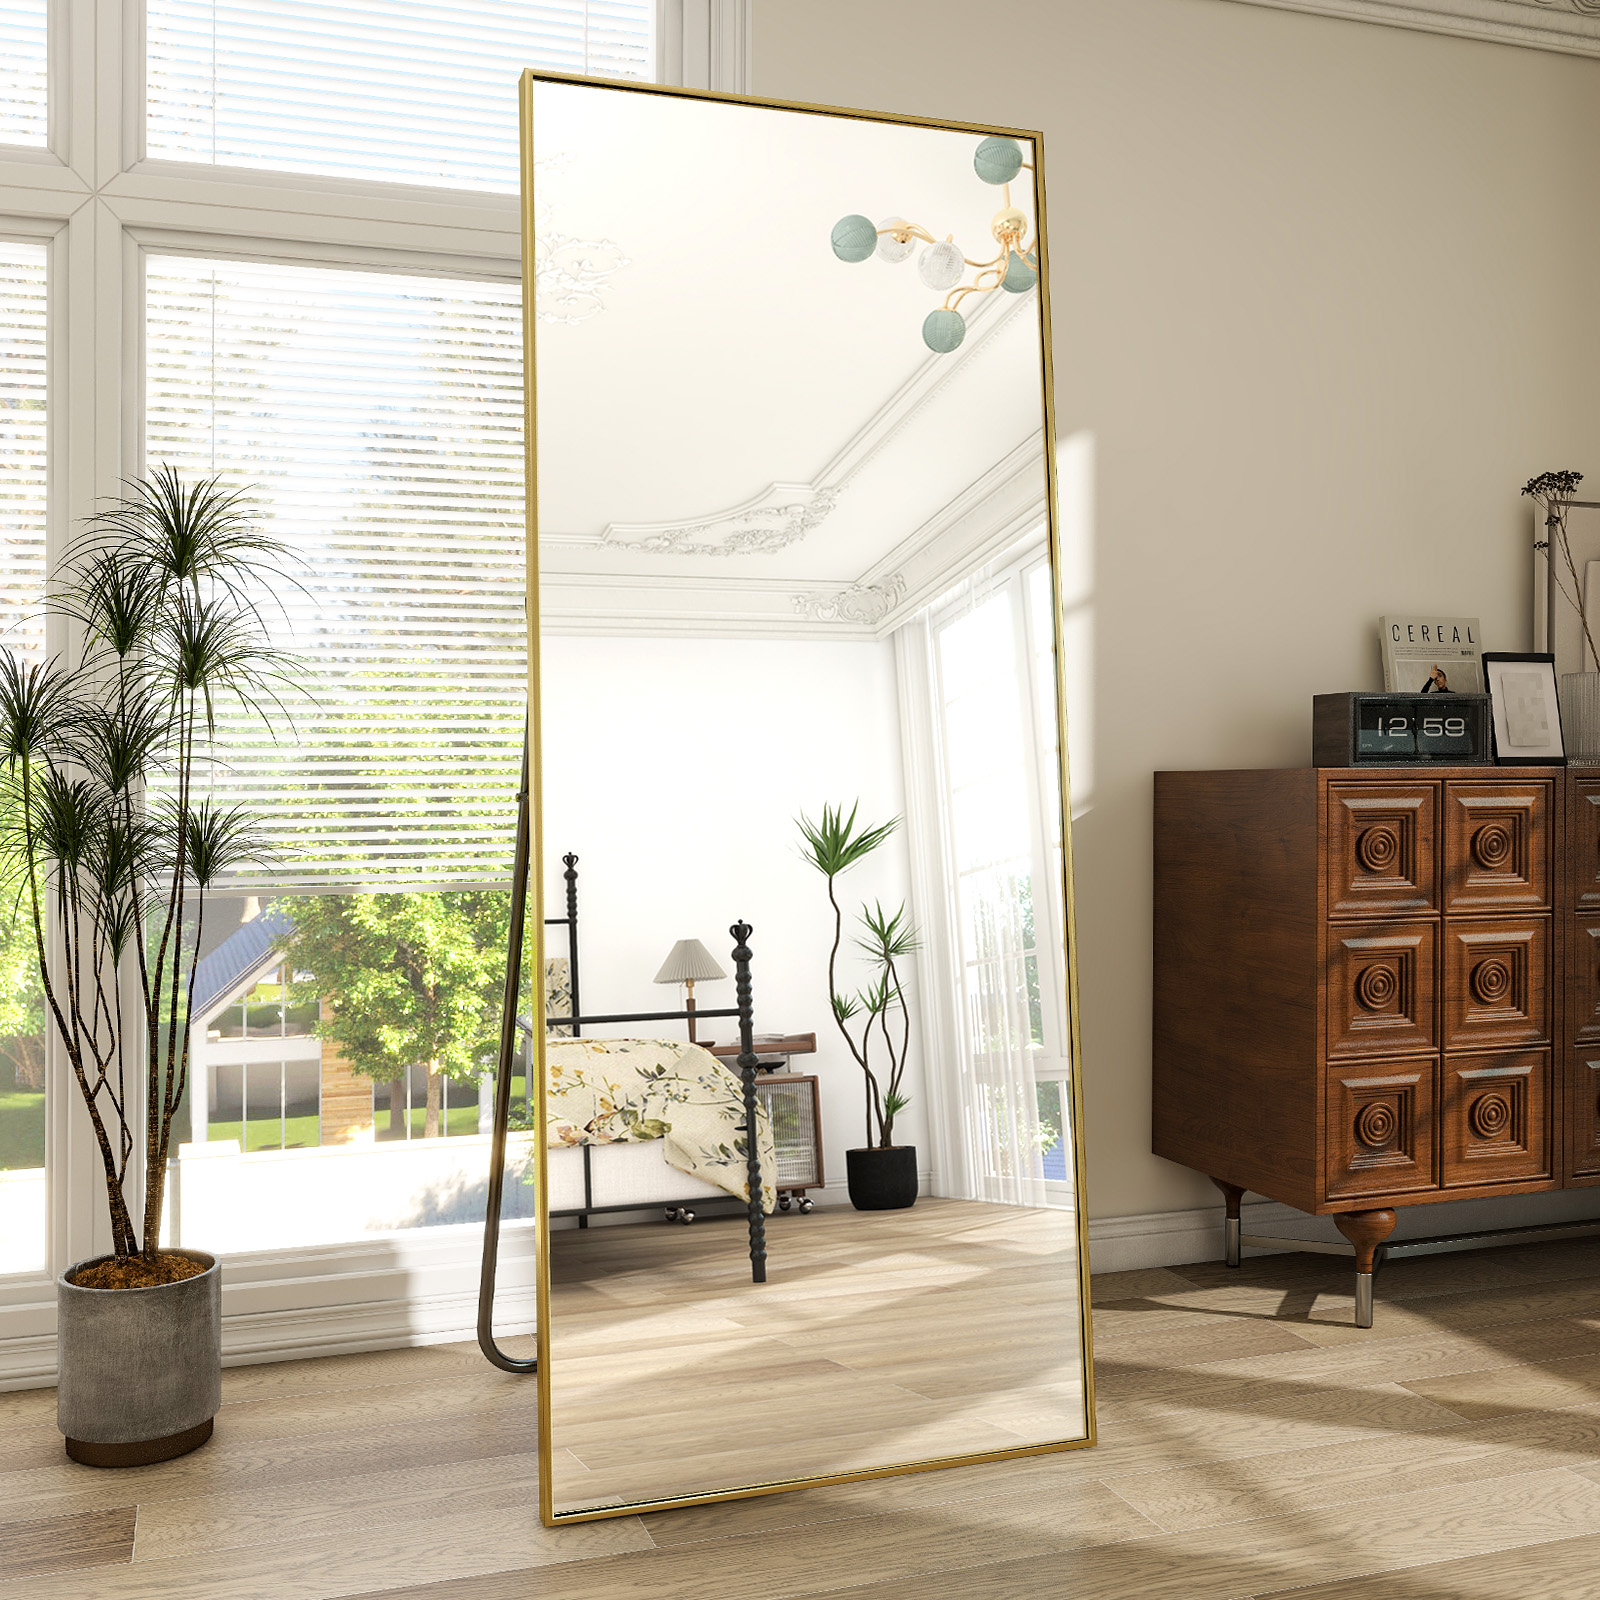 BEAUTYPEAK 71"x26" Full Length Mirror Oversized Rectangle Body Dressing Floor Mirrors for Standing Leaning, Gold - image 4 of 9